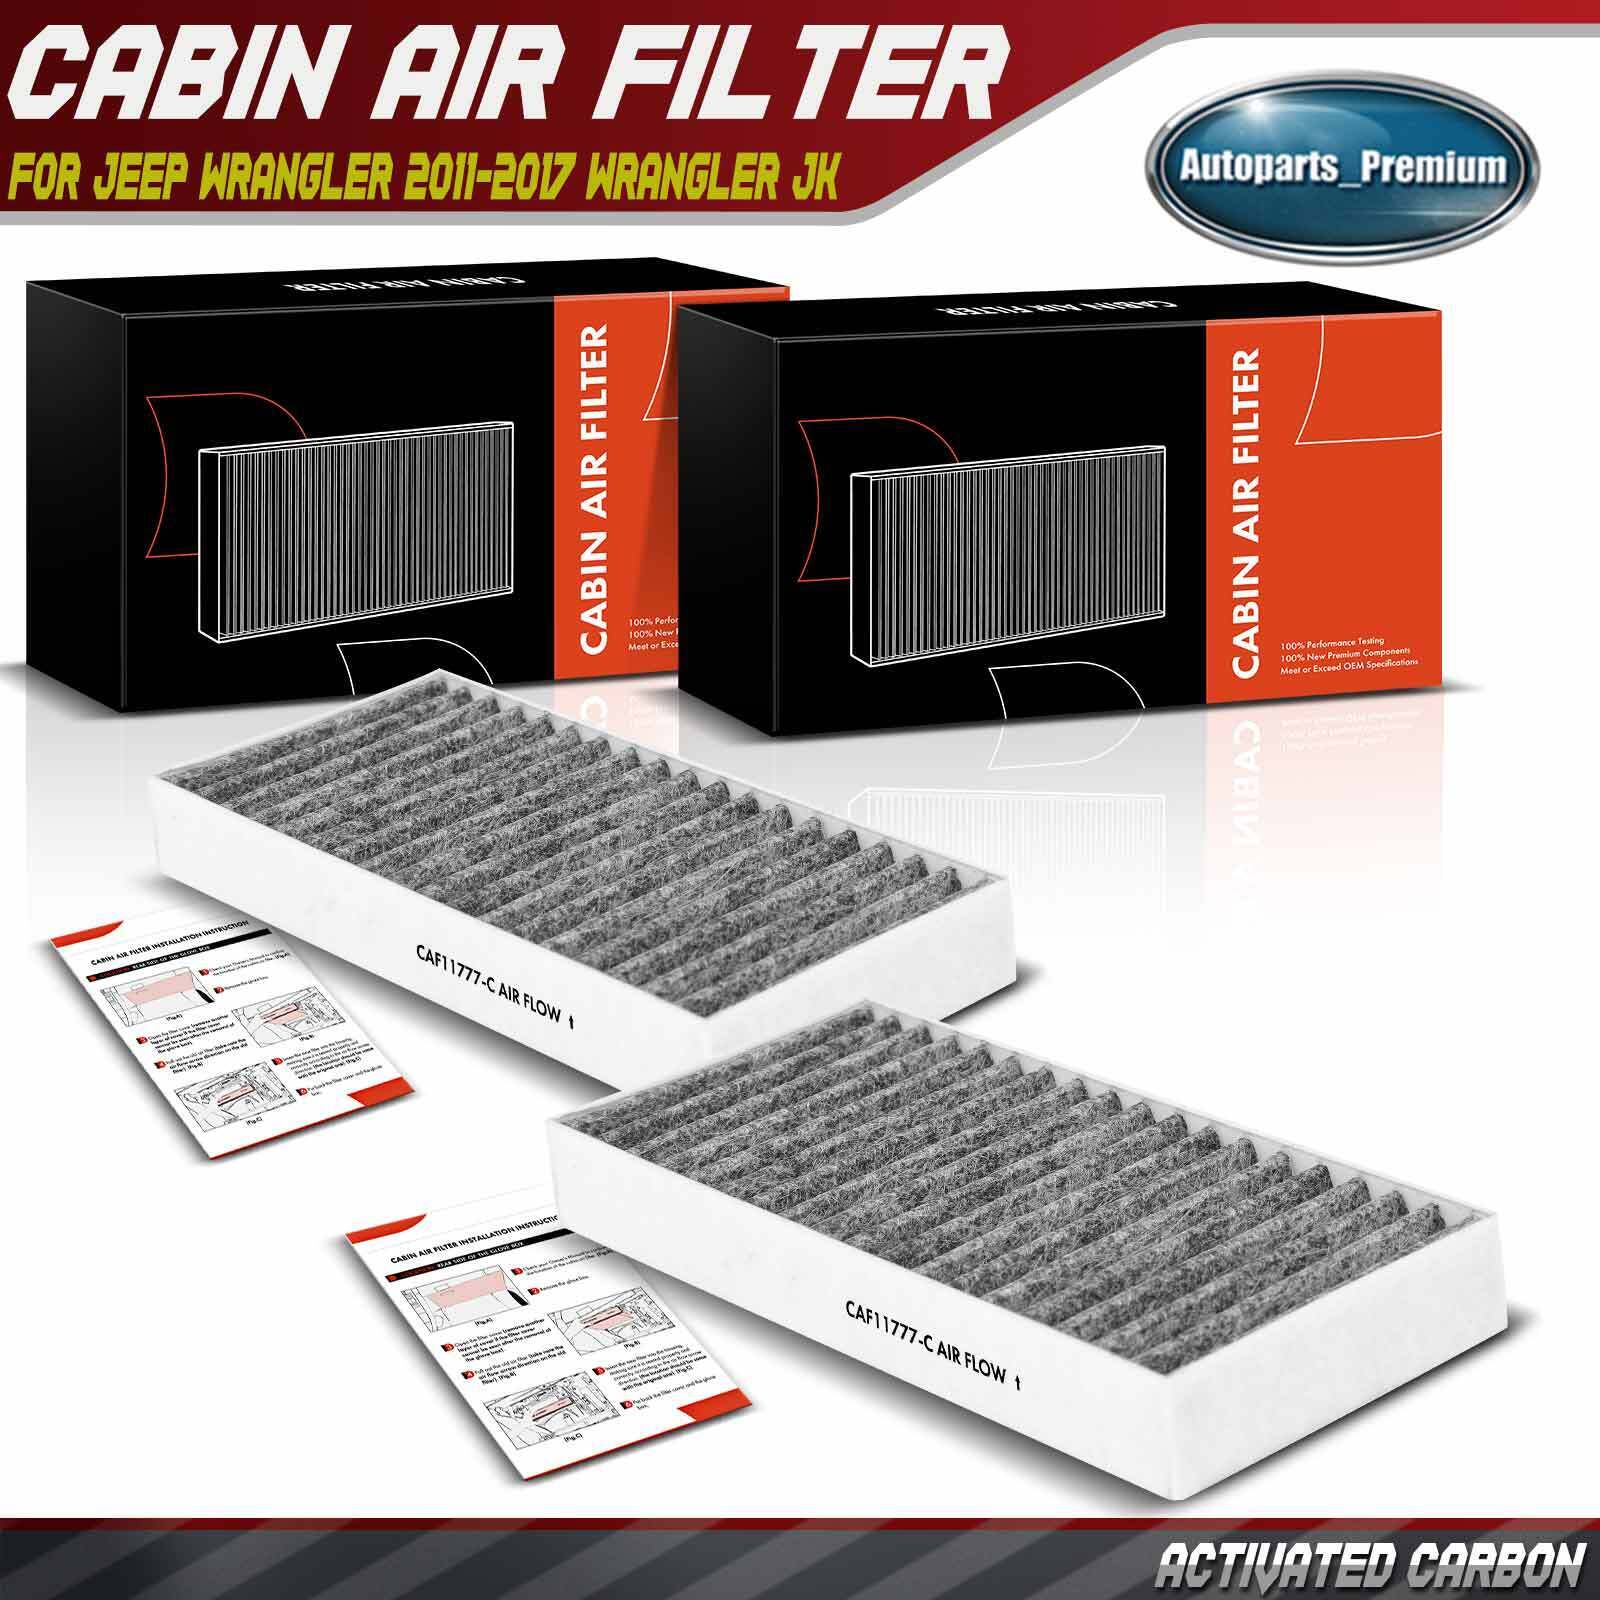 Activated Carbon Cabin Air Filter for Jeep Wrangler 2011-2017 Wrangler JK 2018